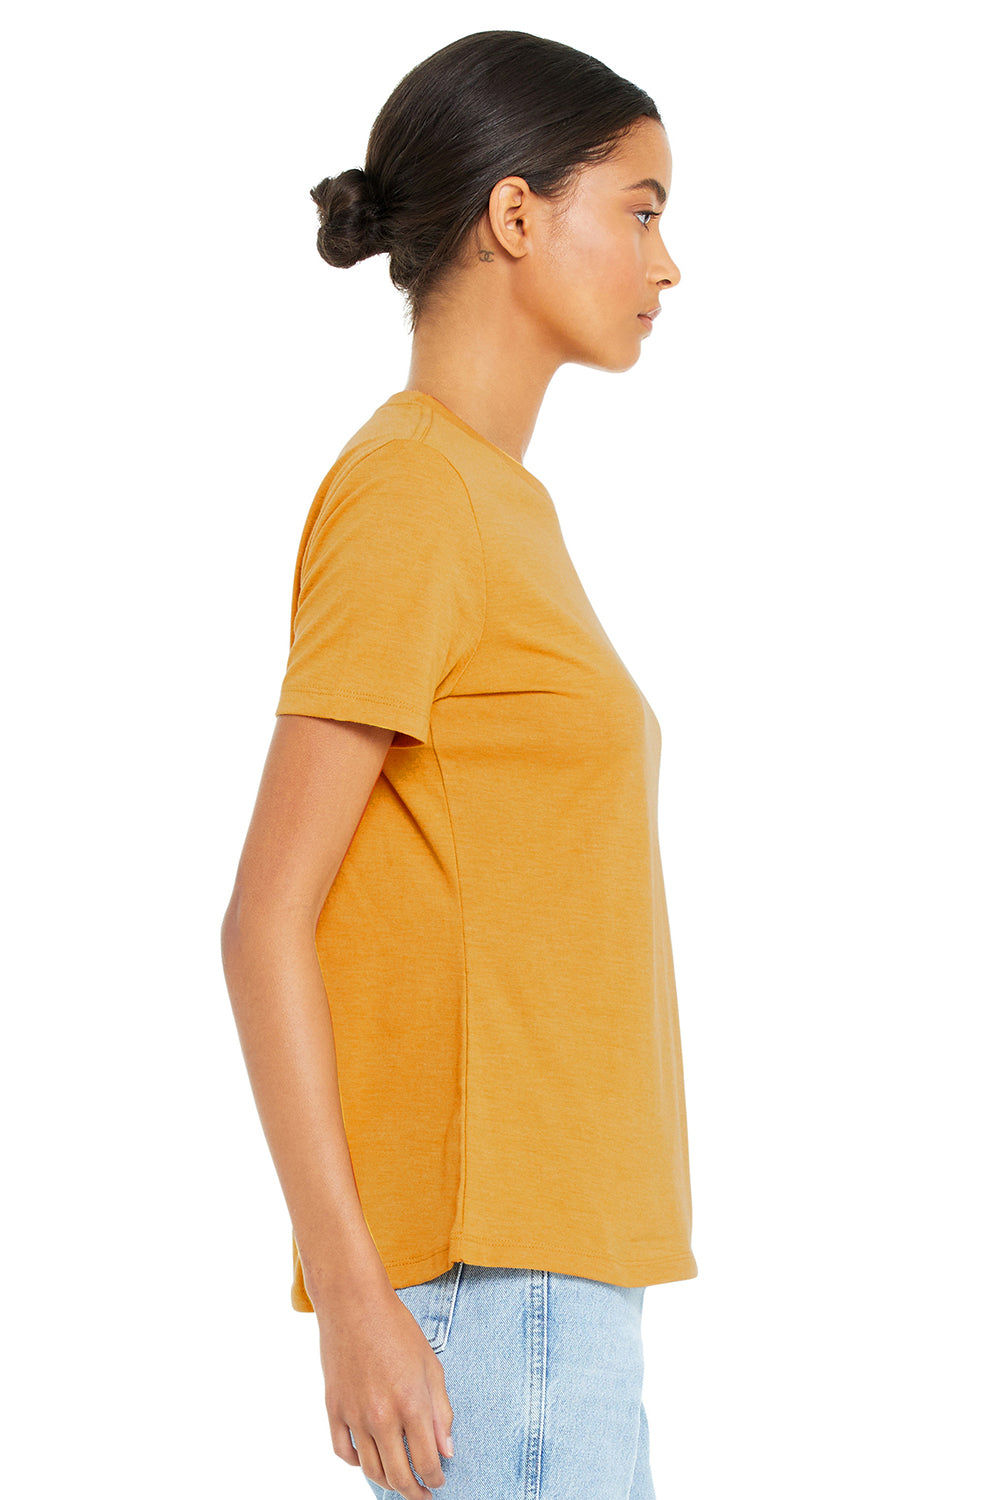 Bella + Canvas BC6400/B6400/6400 Womens Relaxed Jersey Short Sleeve Crewneck T-Shirt Mustard Yellow Model Side